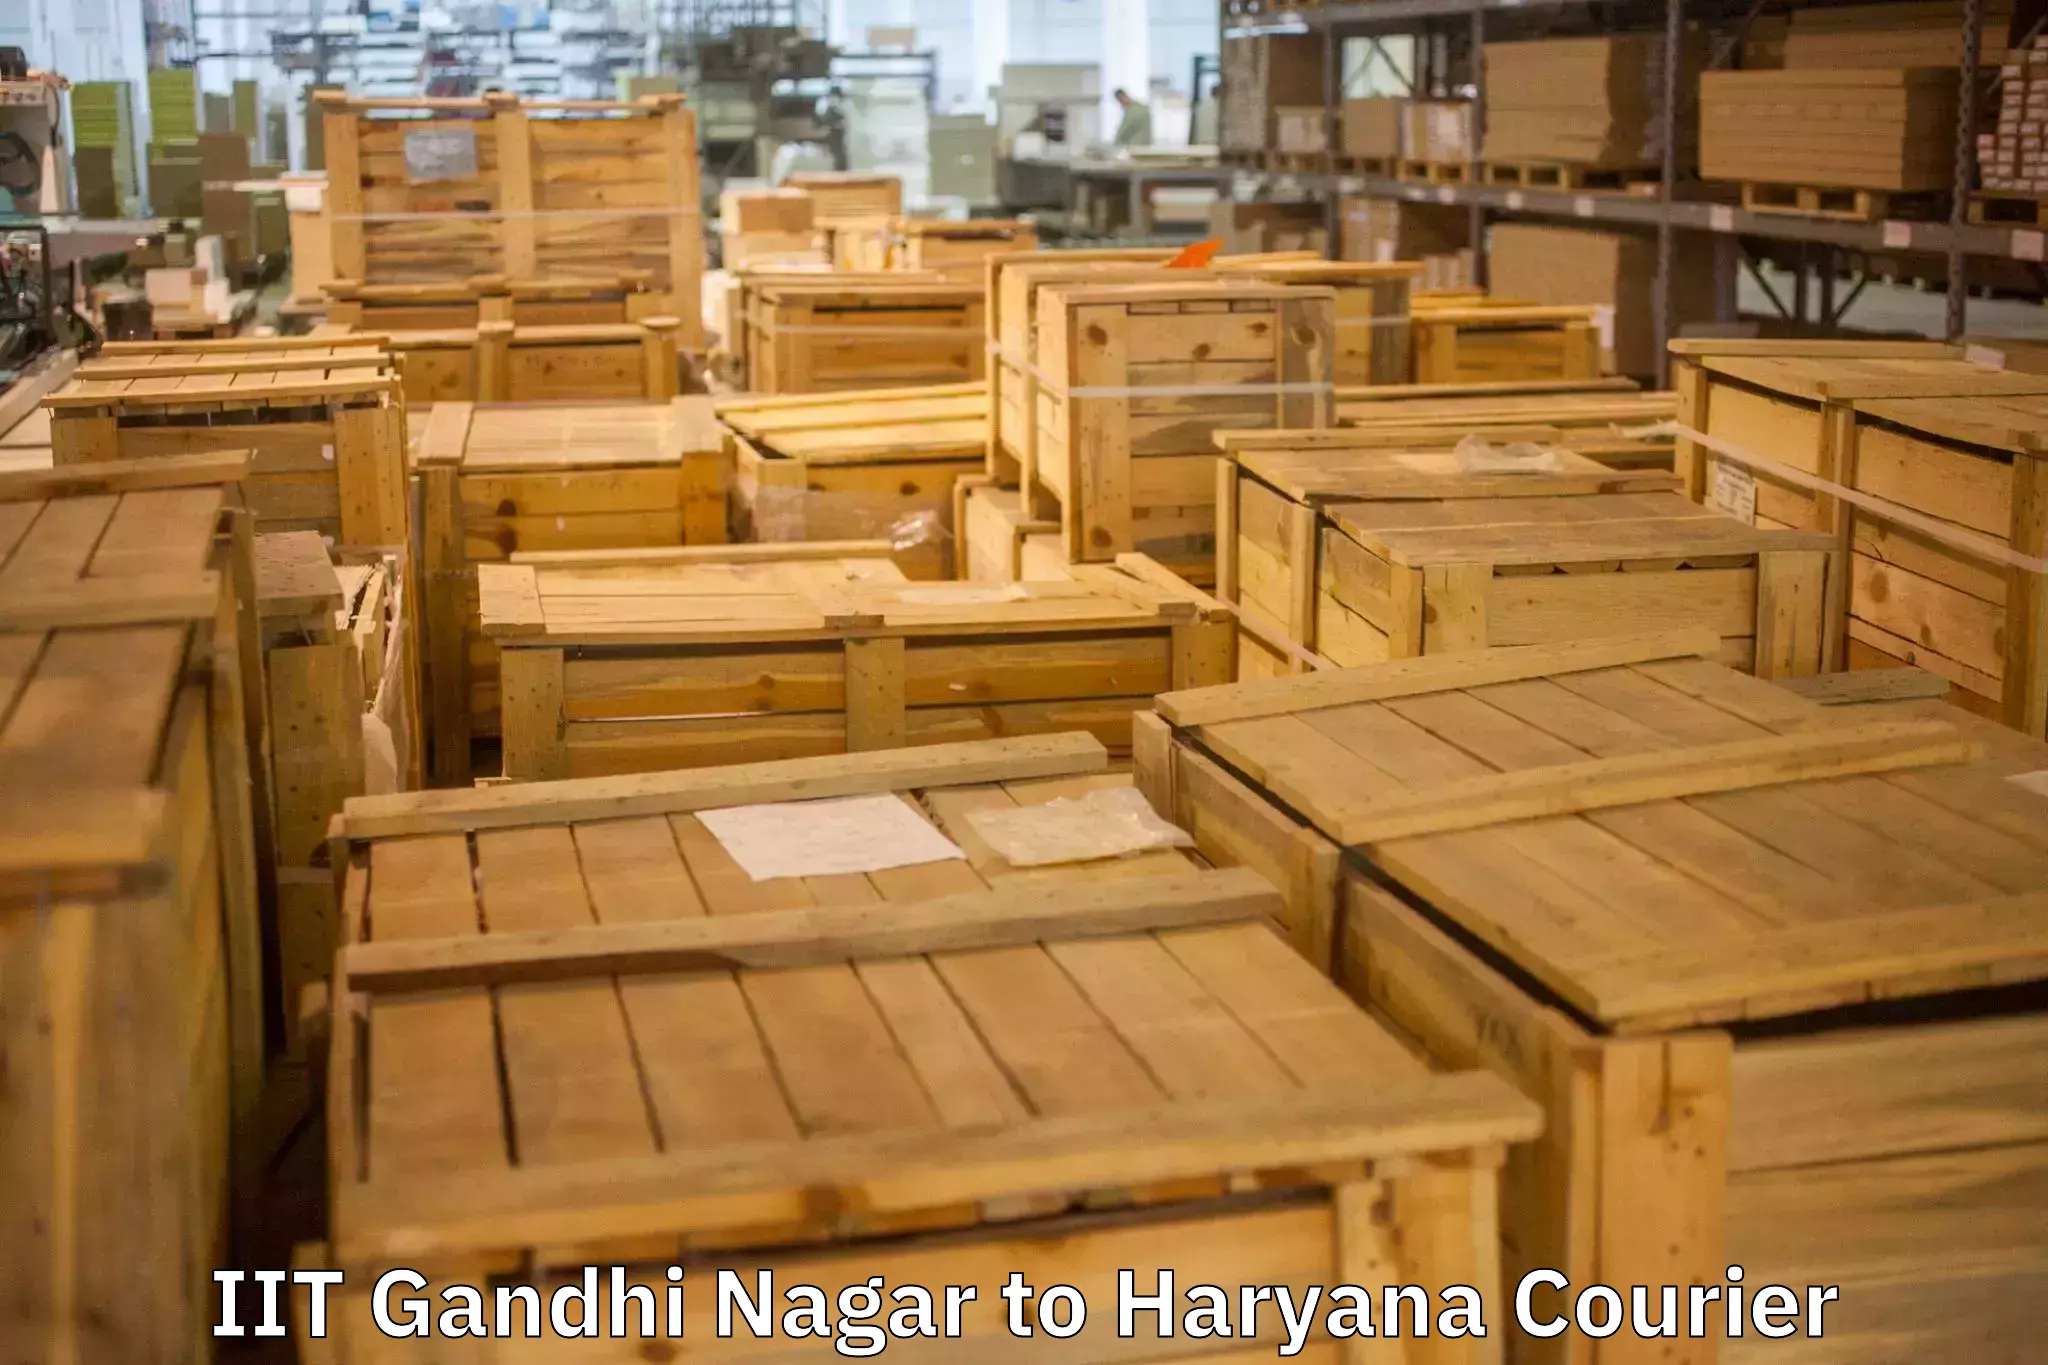 Home moving specialists IIT Gandhi Nagar to Haryana